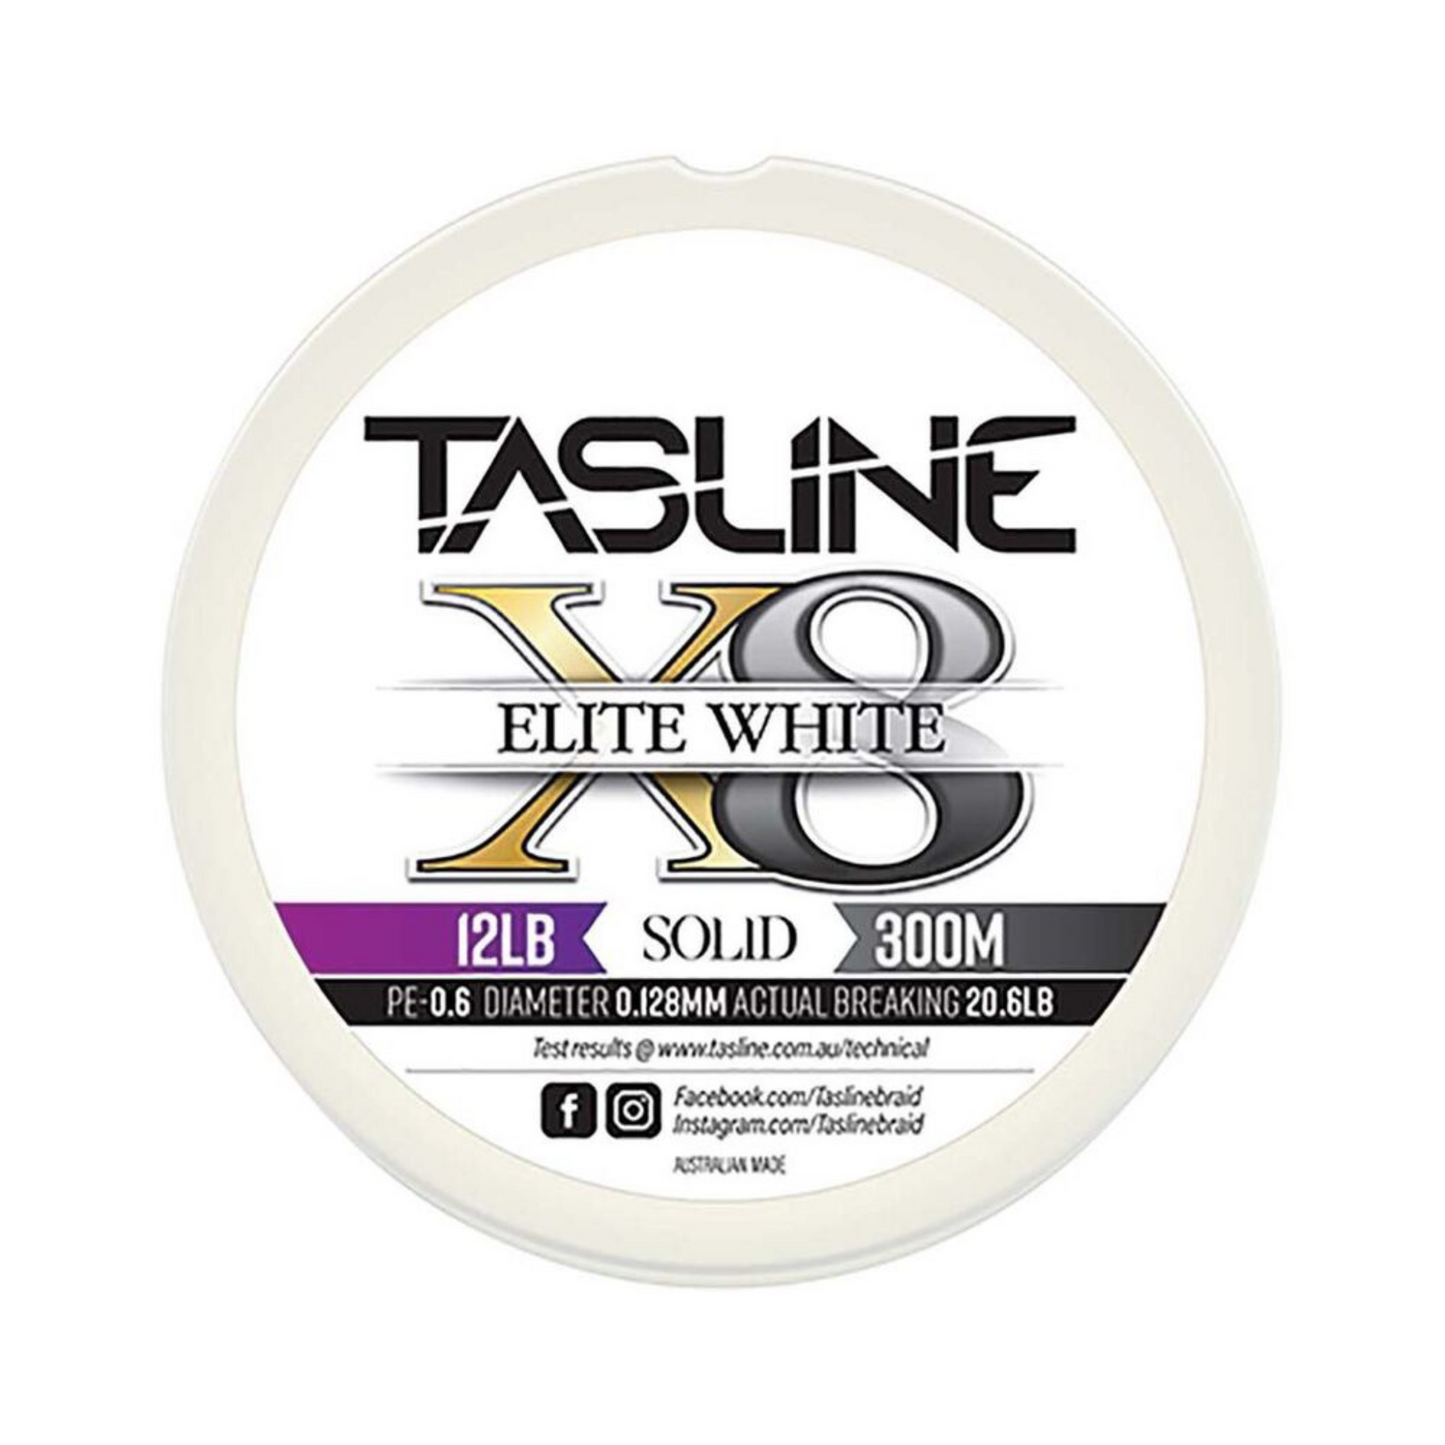 TASLINE ELITE X8 PURE 300m WHITE